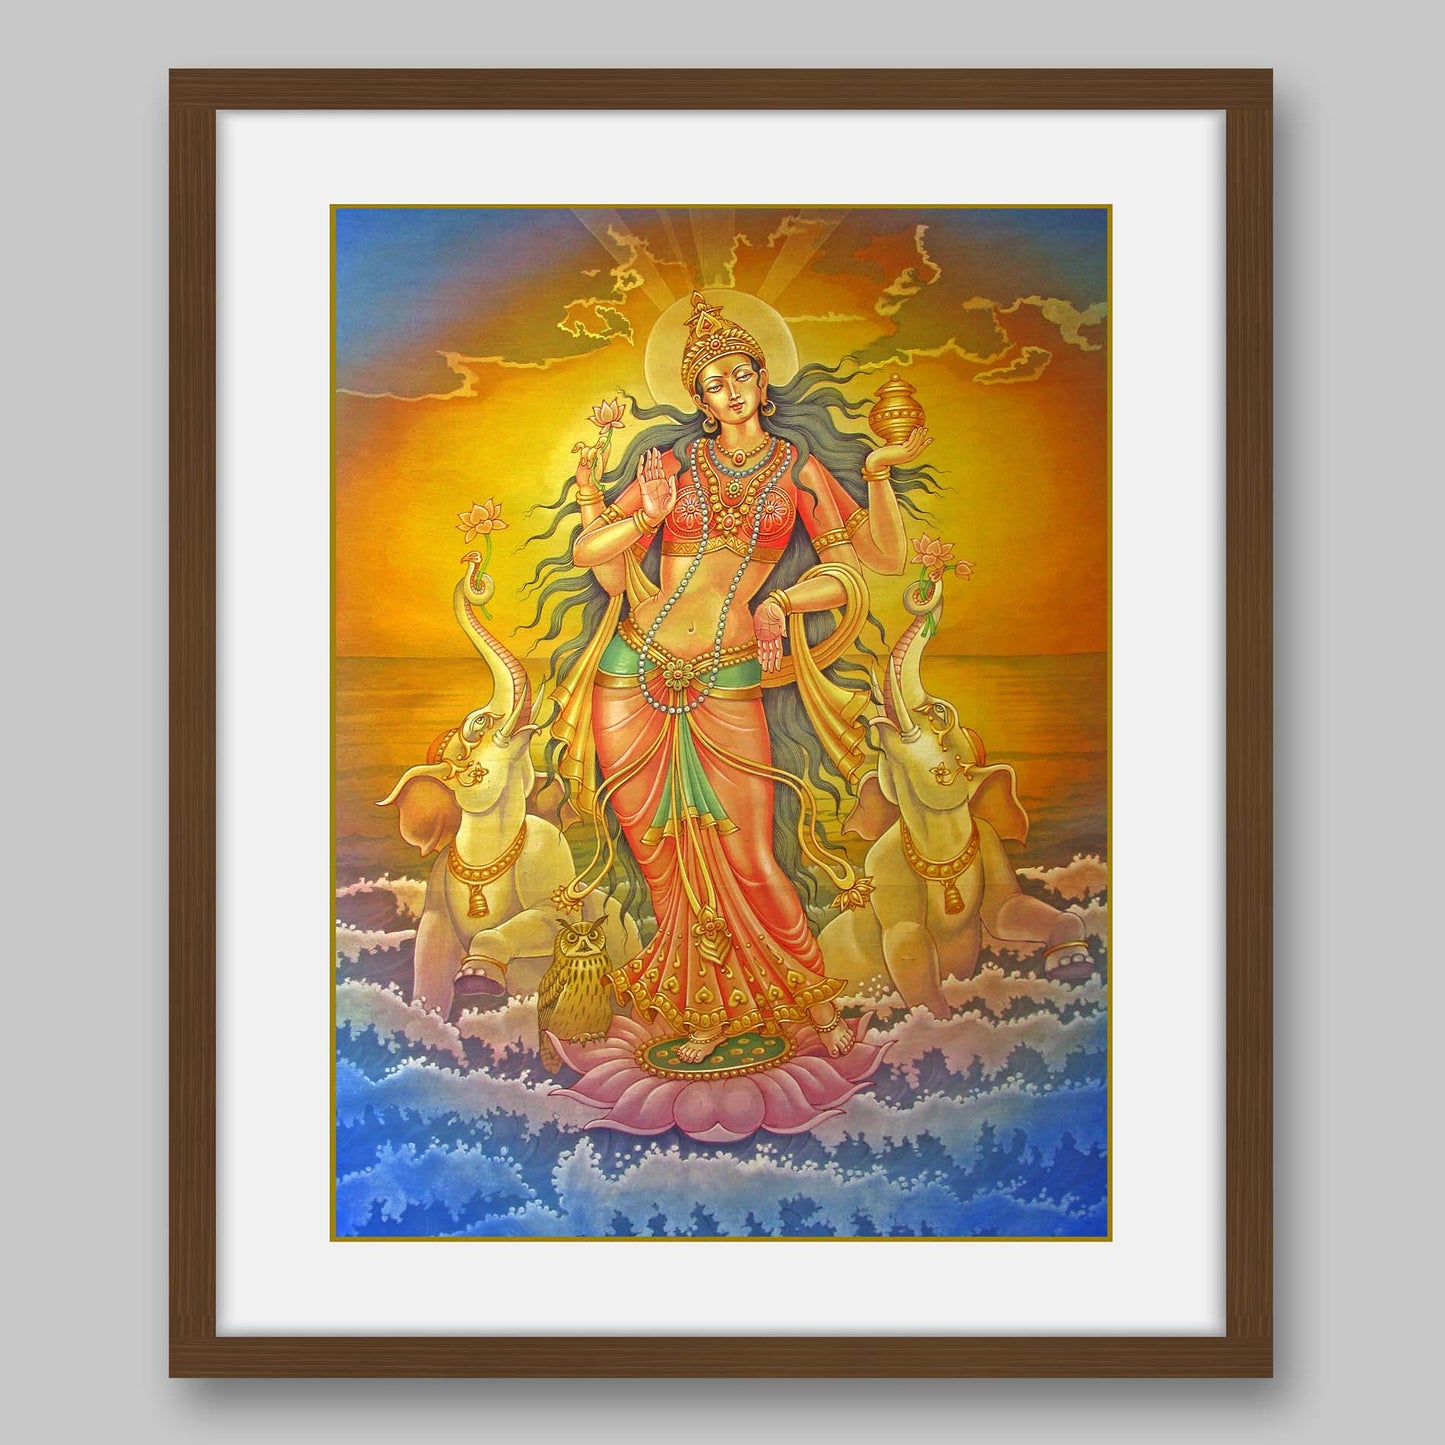 Copy of Lakshmi - High Quality Print of Artwork by Pieter WelteLakshmi - High Quality Print of Artwork by Pieter Weltevrederede